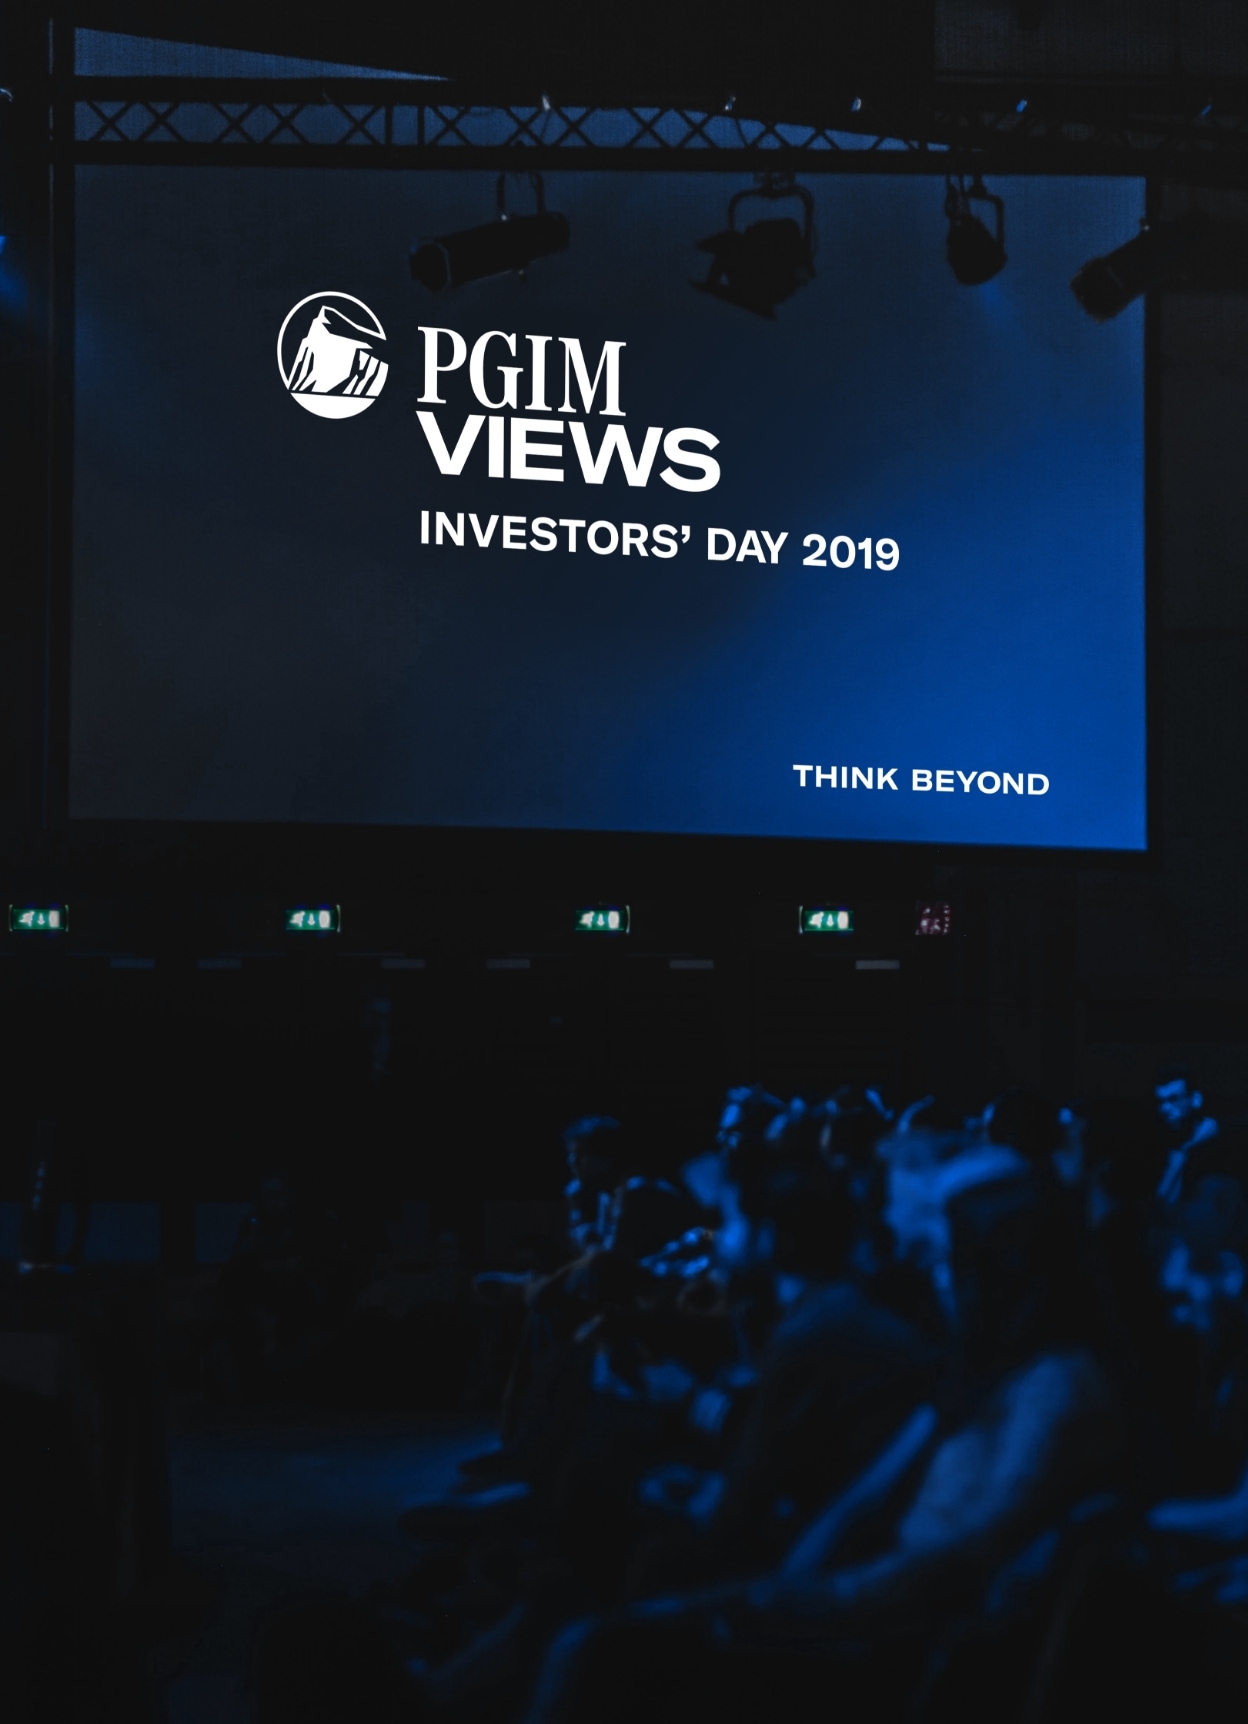 PGIM VIEWS Event Audience